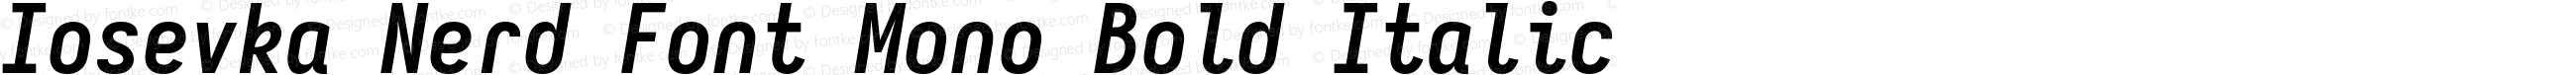 Iosevka Nerd Font Mono Bold Italic